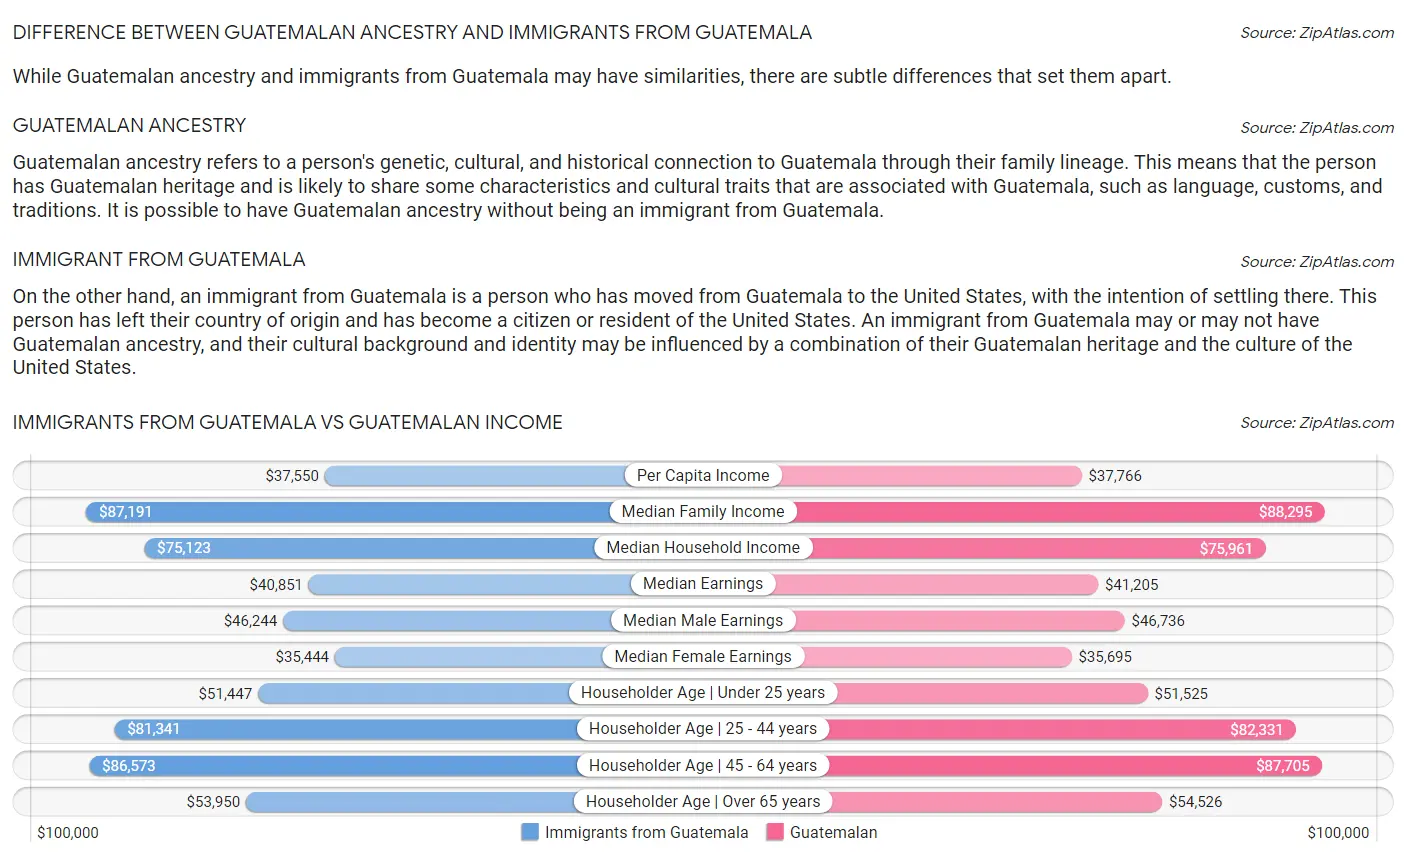 Immigrants from Guatemala vs Guatemalan Income